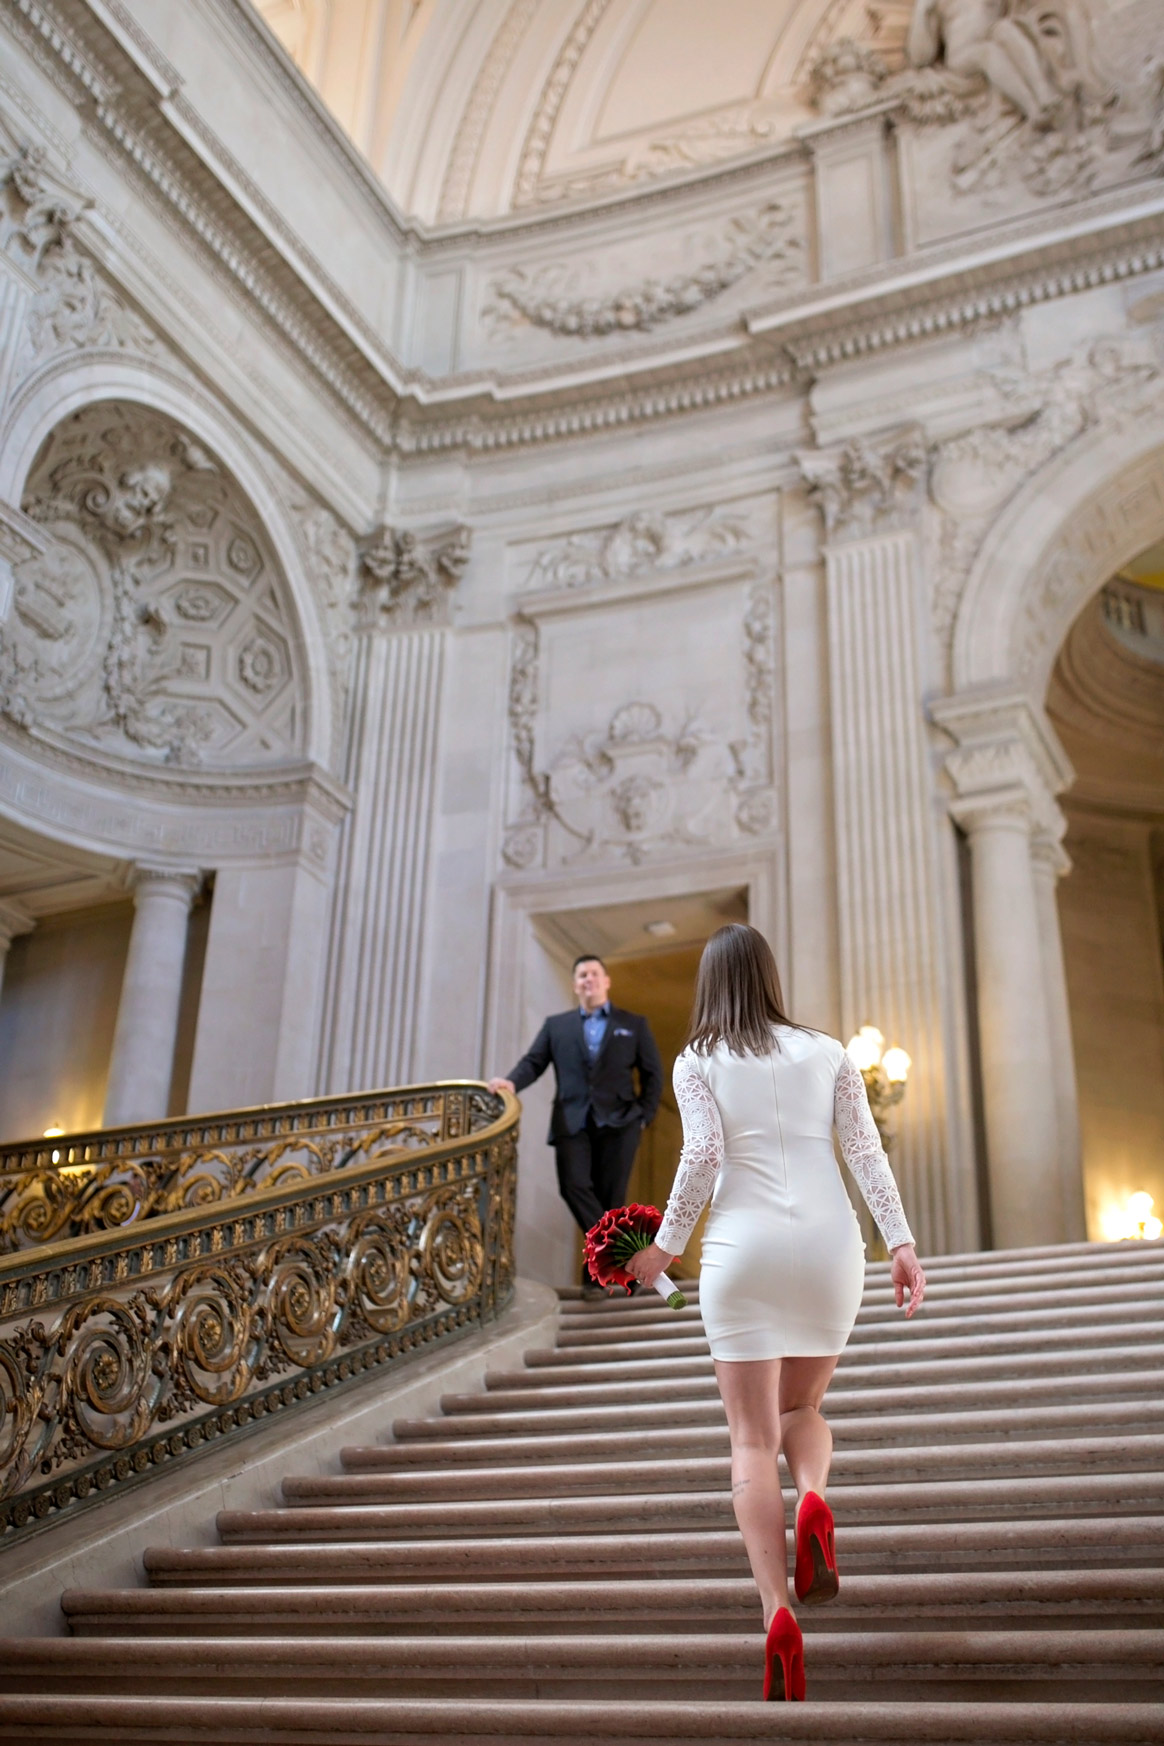 San Francisco city hall wedding photography